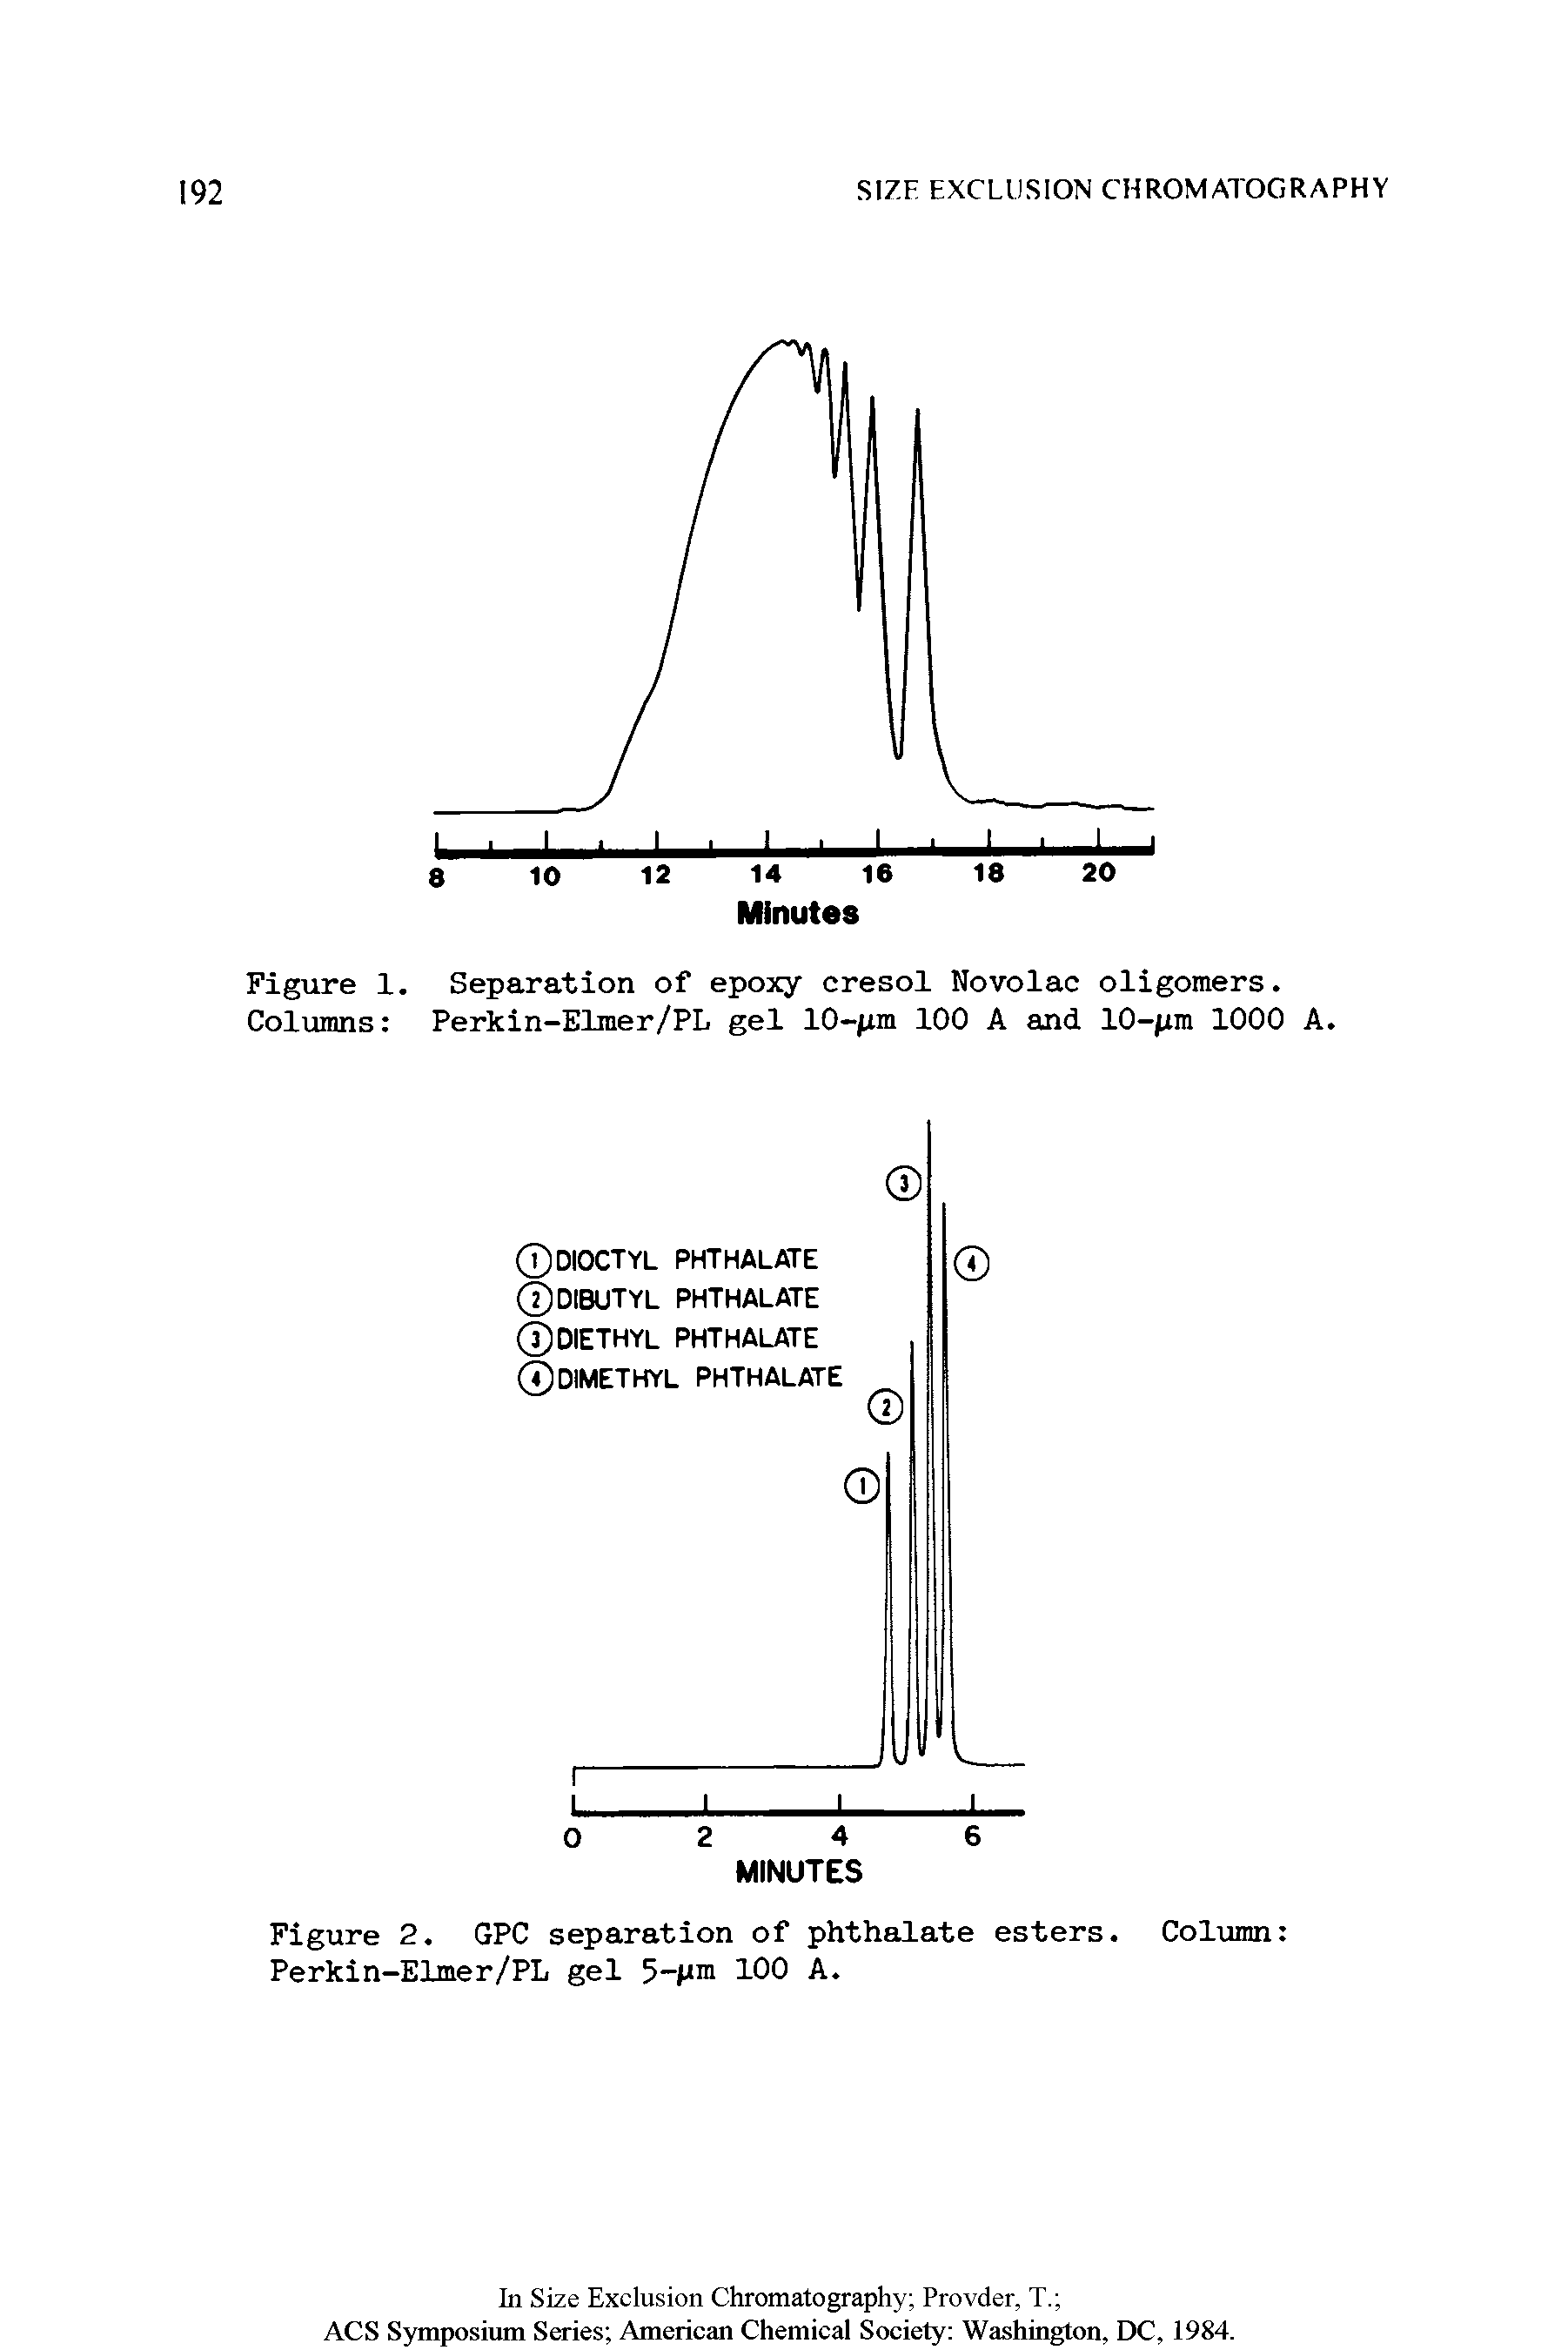 Figure 2. GPC separation of phthalate esters. Col imn Perkin-Elmer/PL gel 100 A.